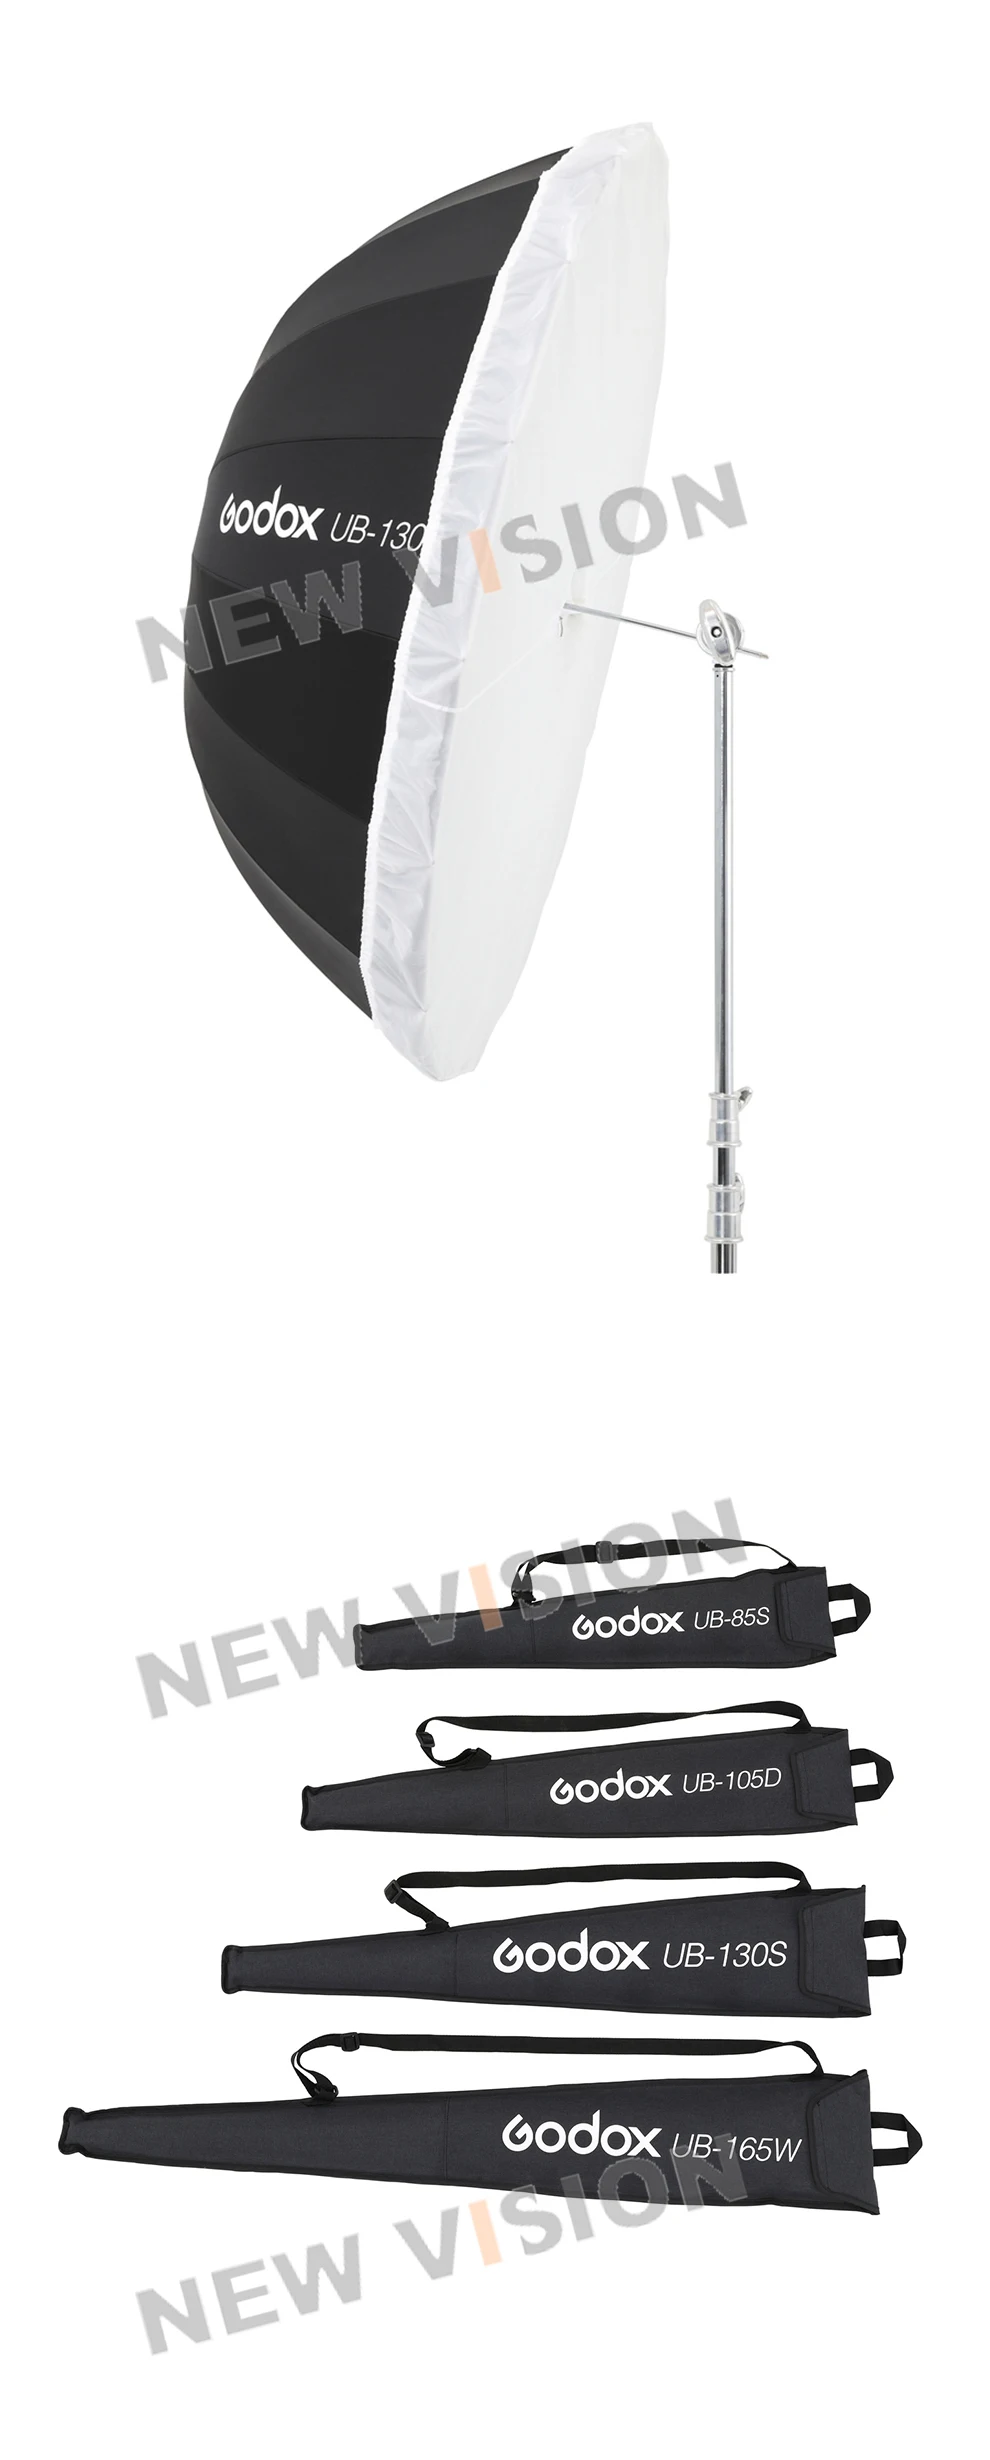 Black/Silver Godox UB-130S 130cm Parabolic Reflective Soft Light Umbrella for Studio Photographic Lighting 